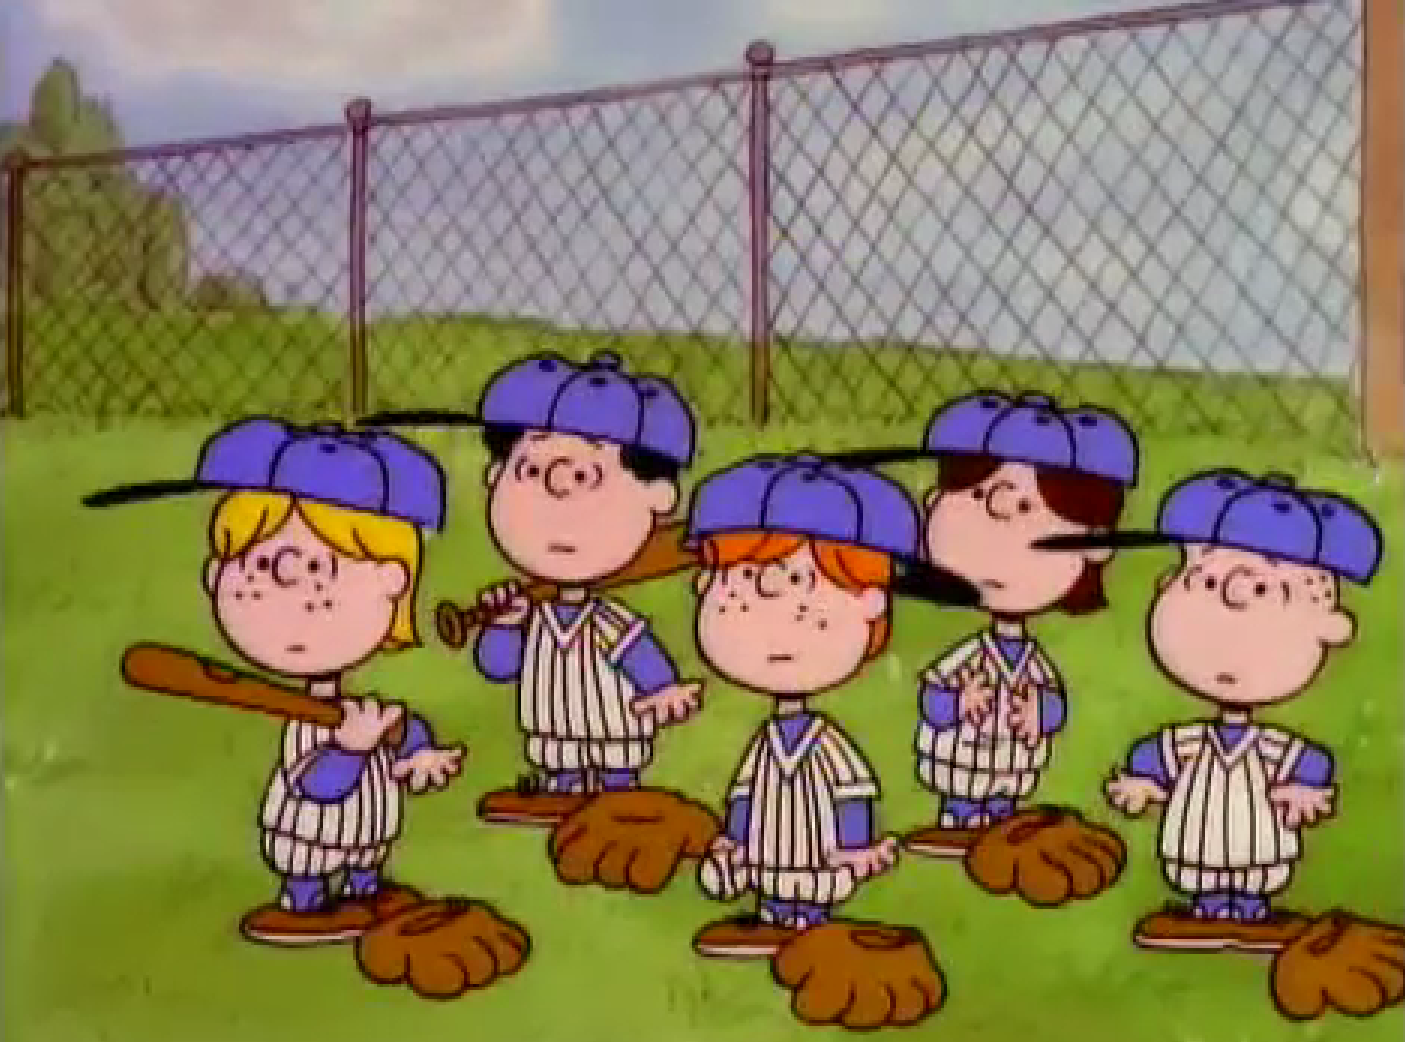 Vol gegevens ontwikkelen Unnamed baseball team | Peanuts Wiki | Fandom